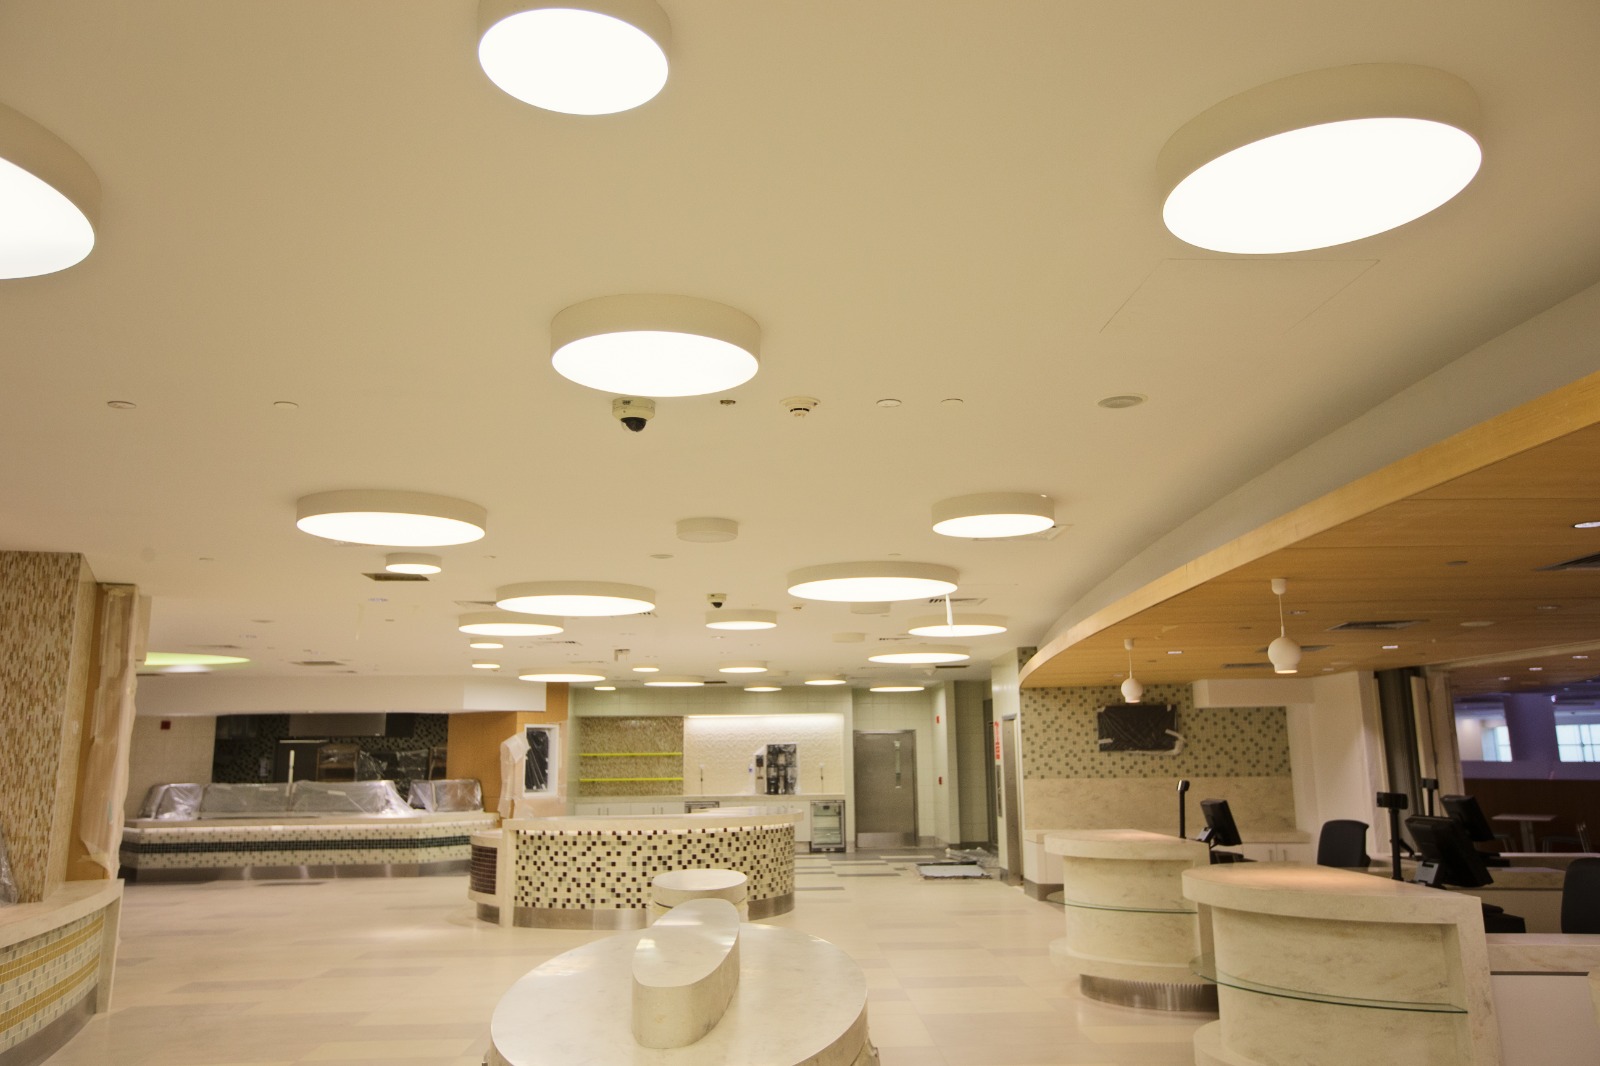 Euro Systems® Baswa Acoustic Ceiling Dubai, Abu Dhabi, Sharjah, Ajman, UAE. Doha, Qatar. Kuwait